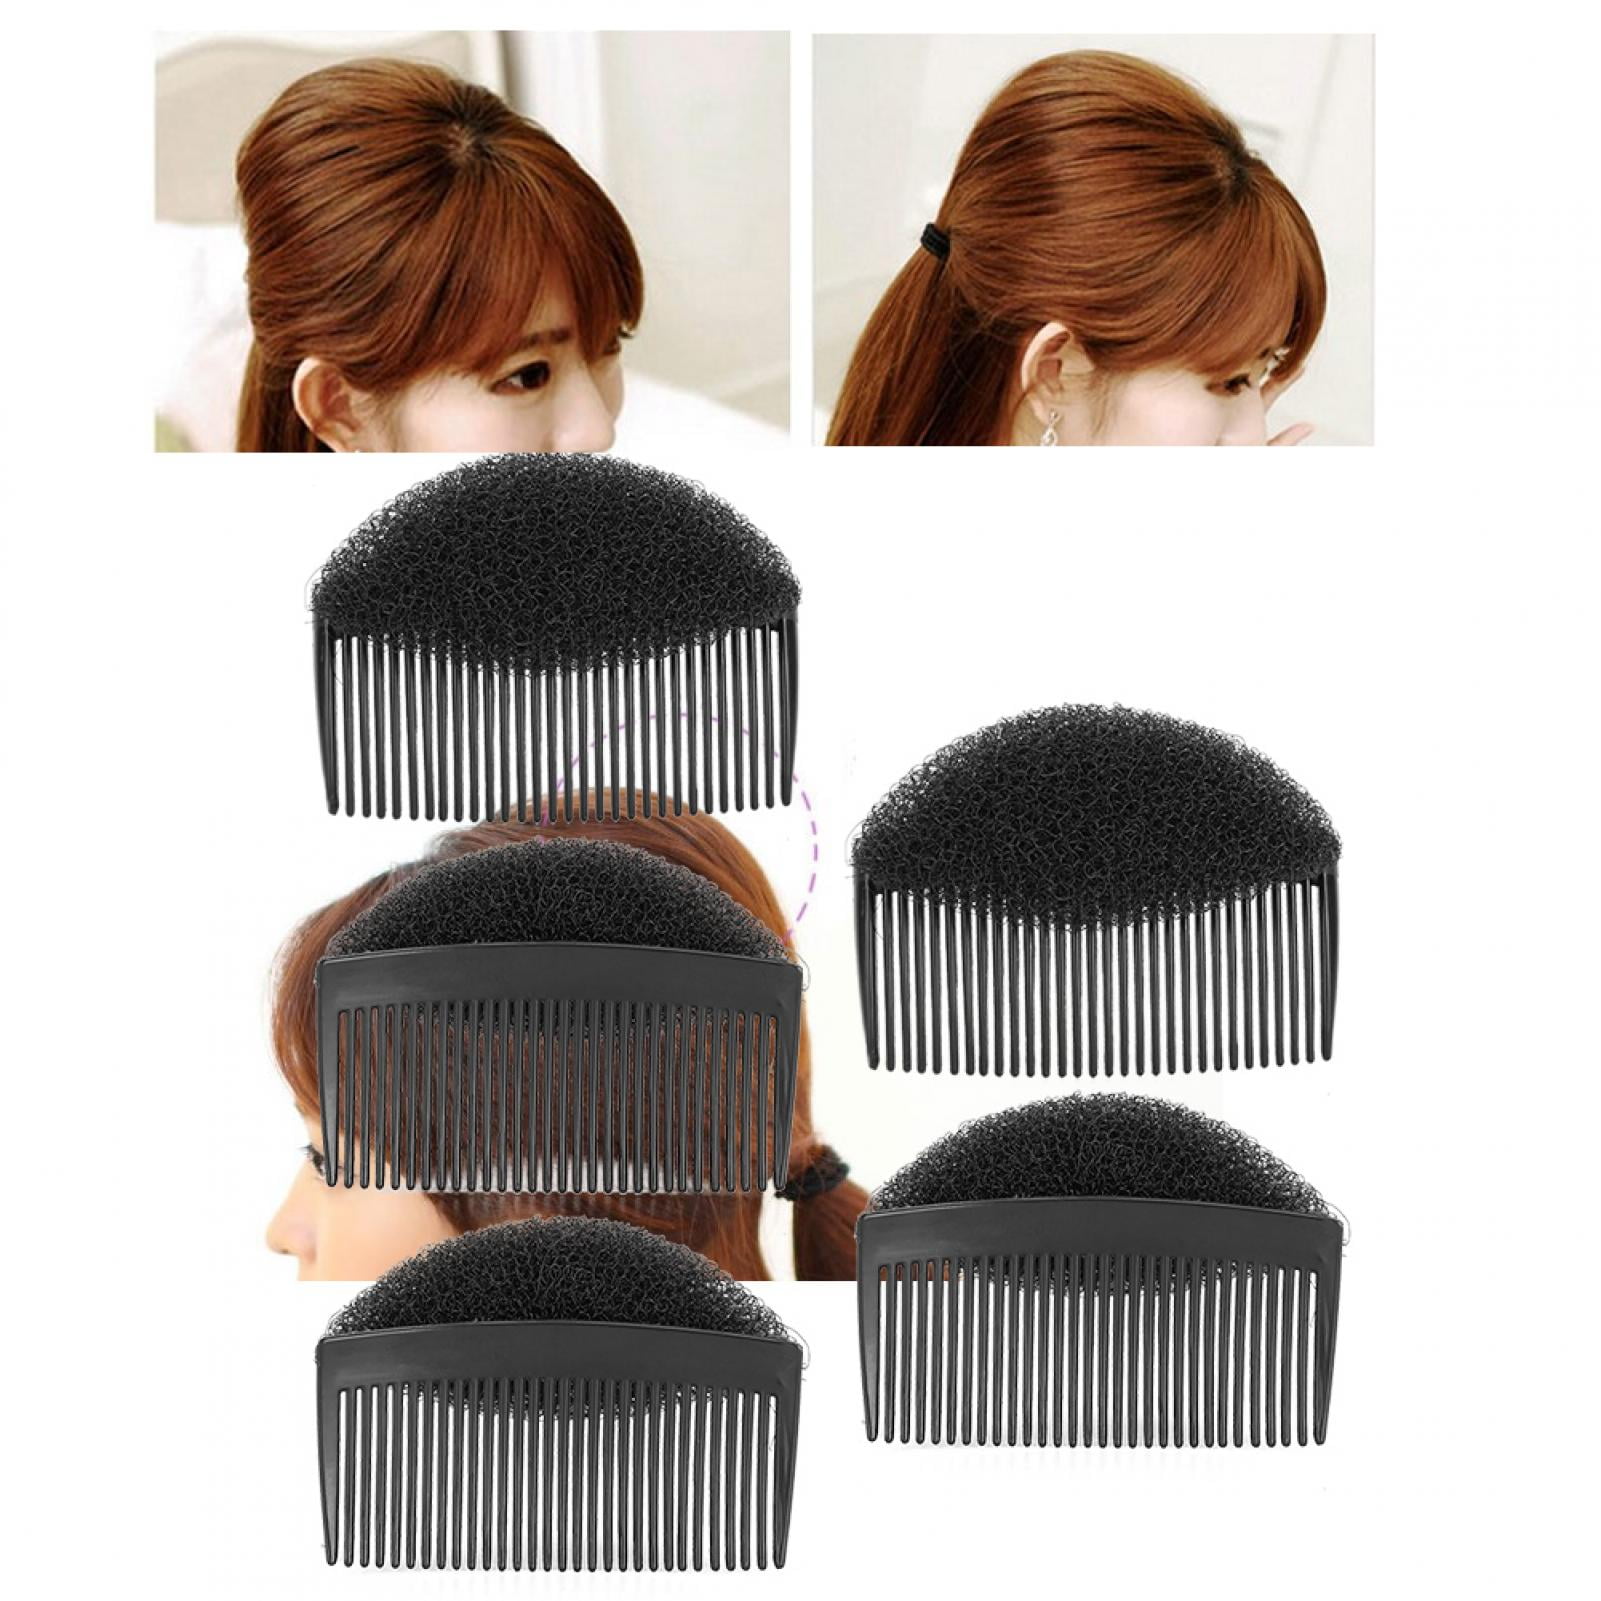 Hair Fluffy Pad Hair Pad Nylon Practical Daily Hair Style Personal Use For  Hair Salon Use Hair Style | Walmart Canada